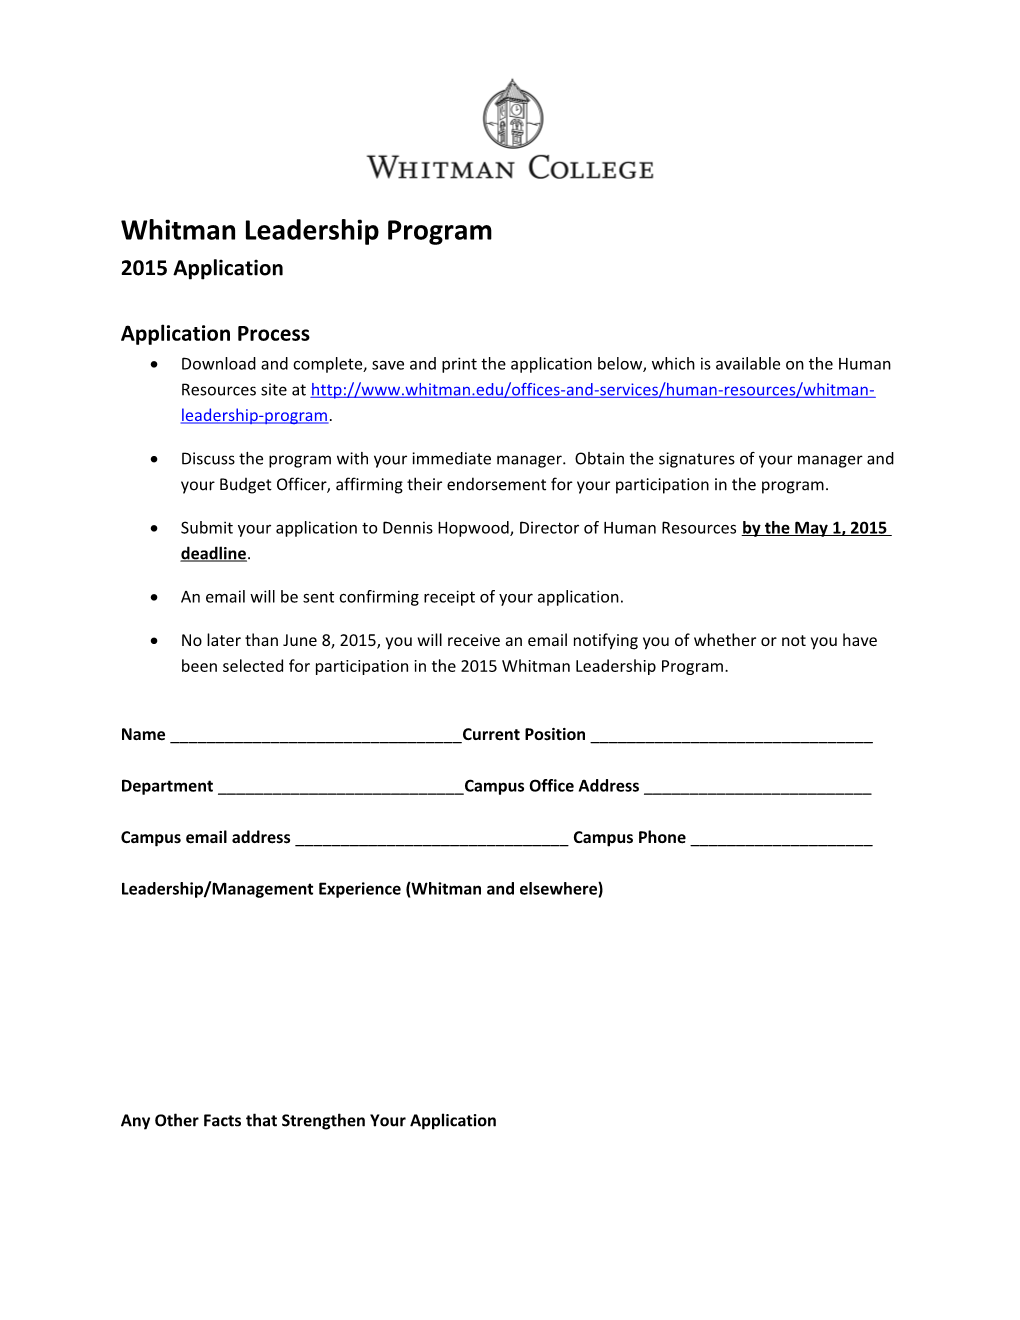 Whitman Leadership Program